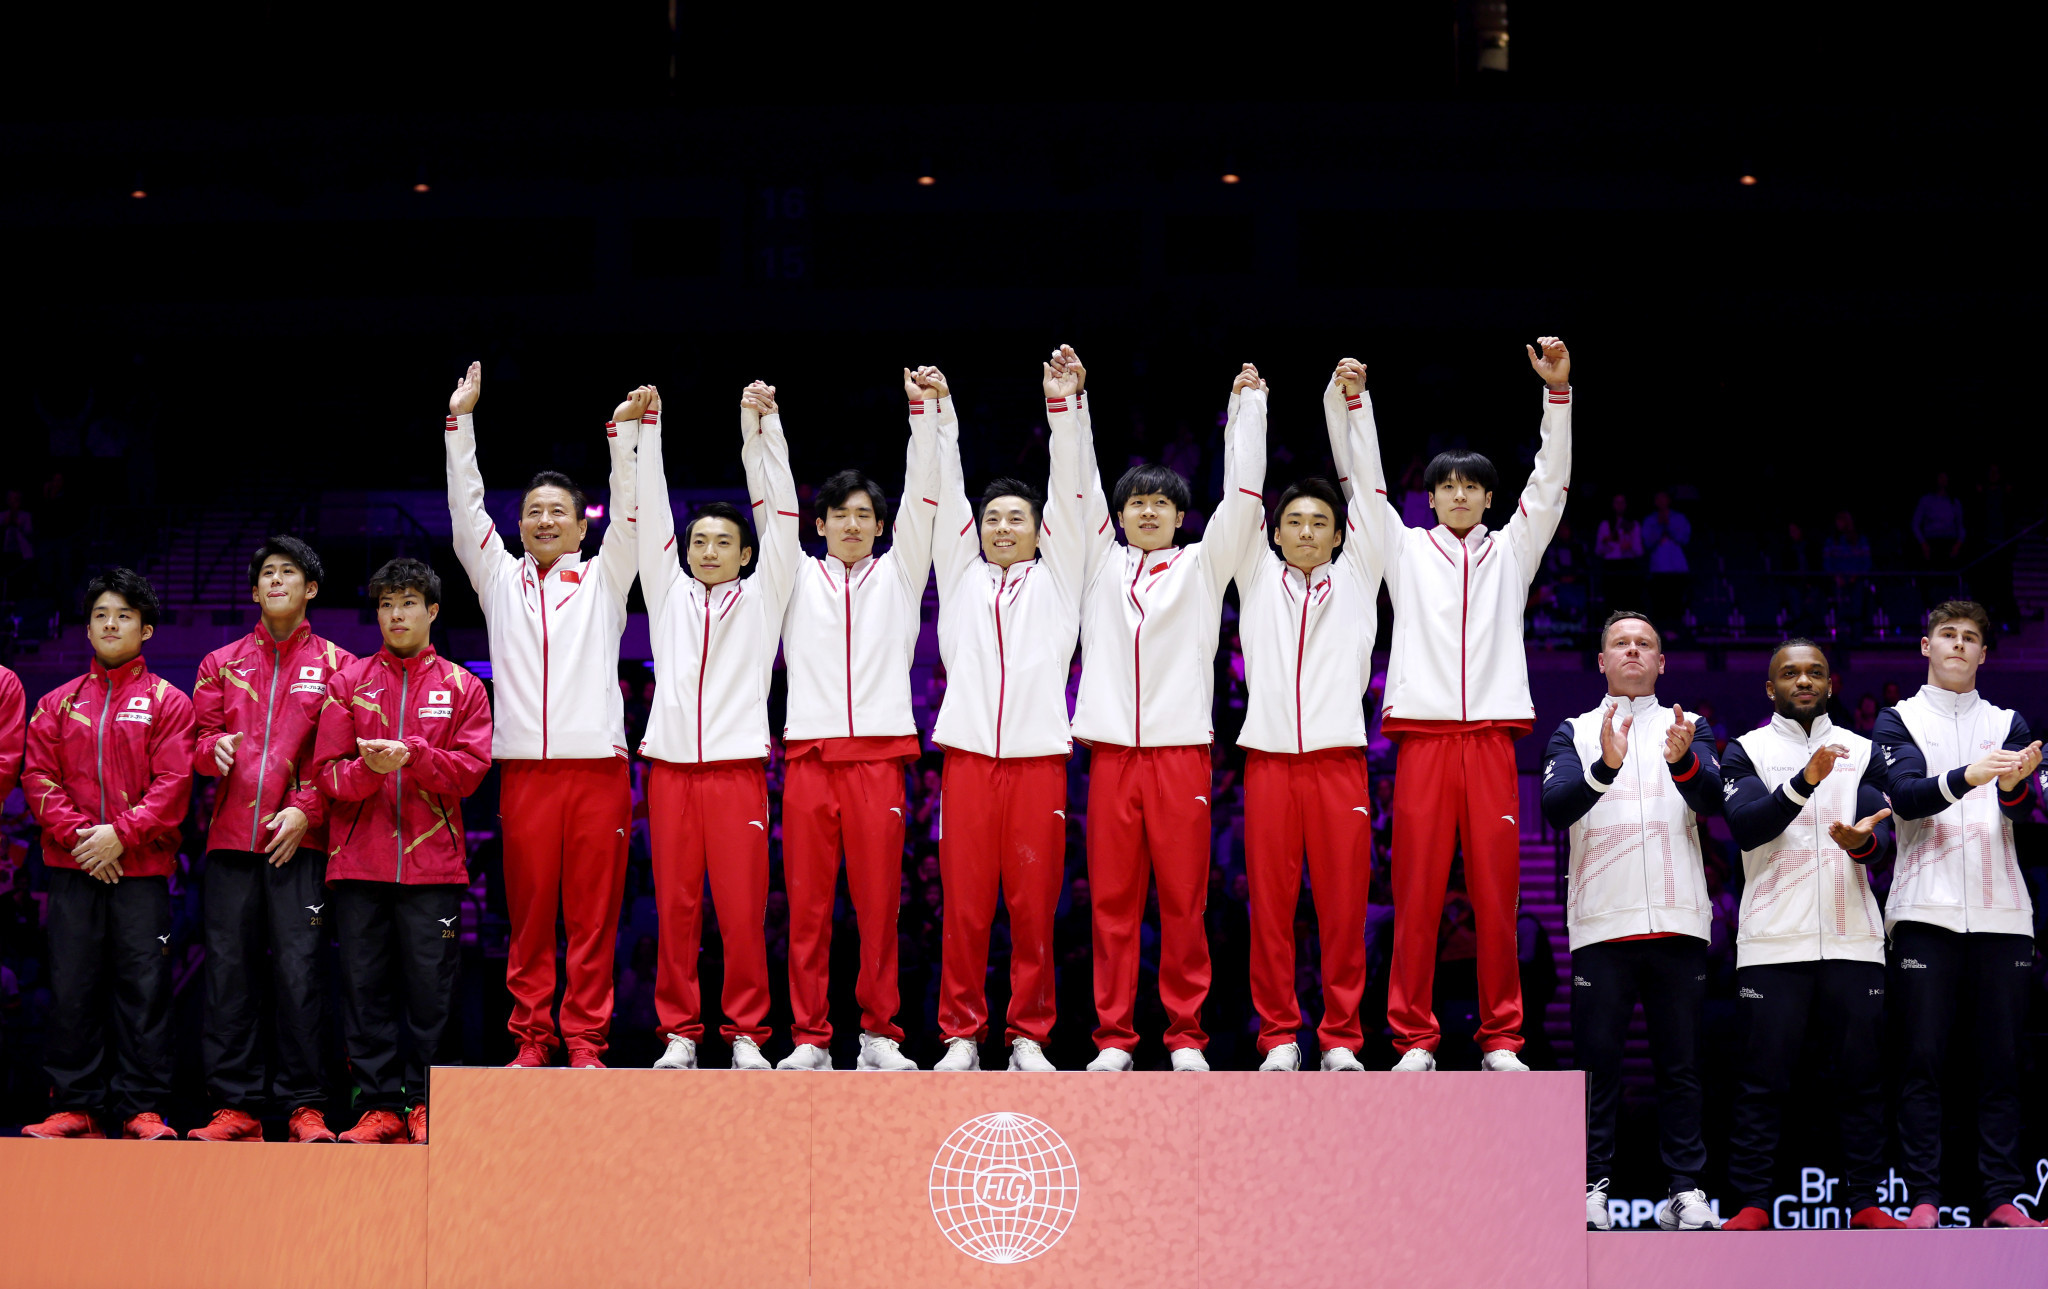 China seal men's team title at World Artistic Gymnastics Championships